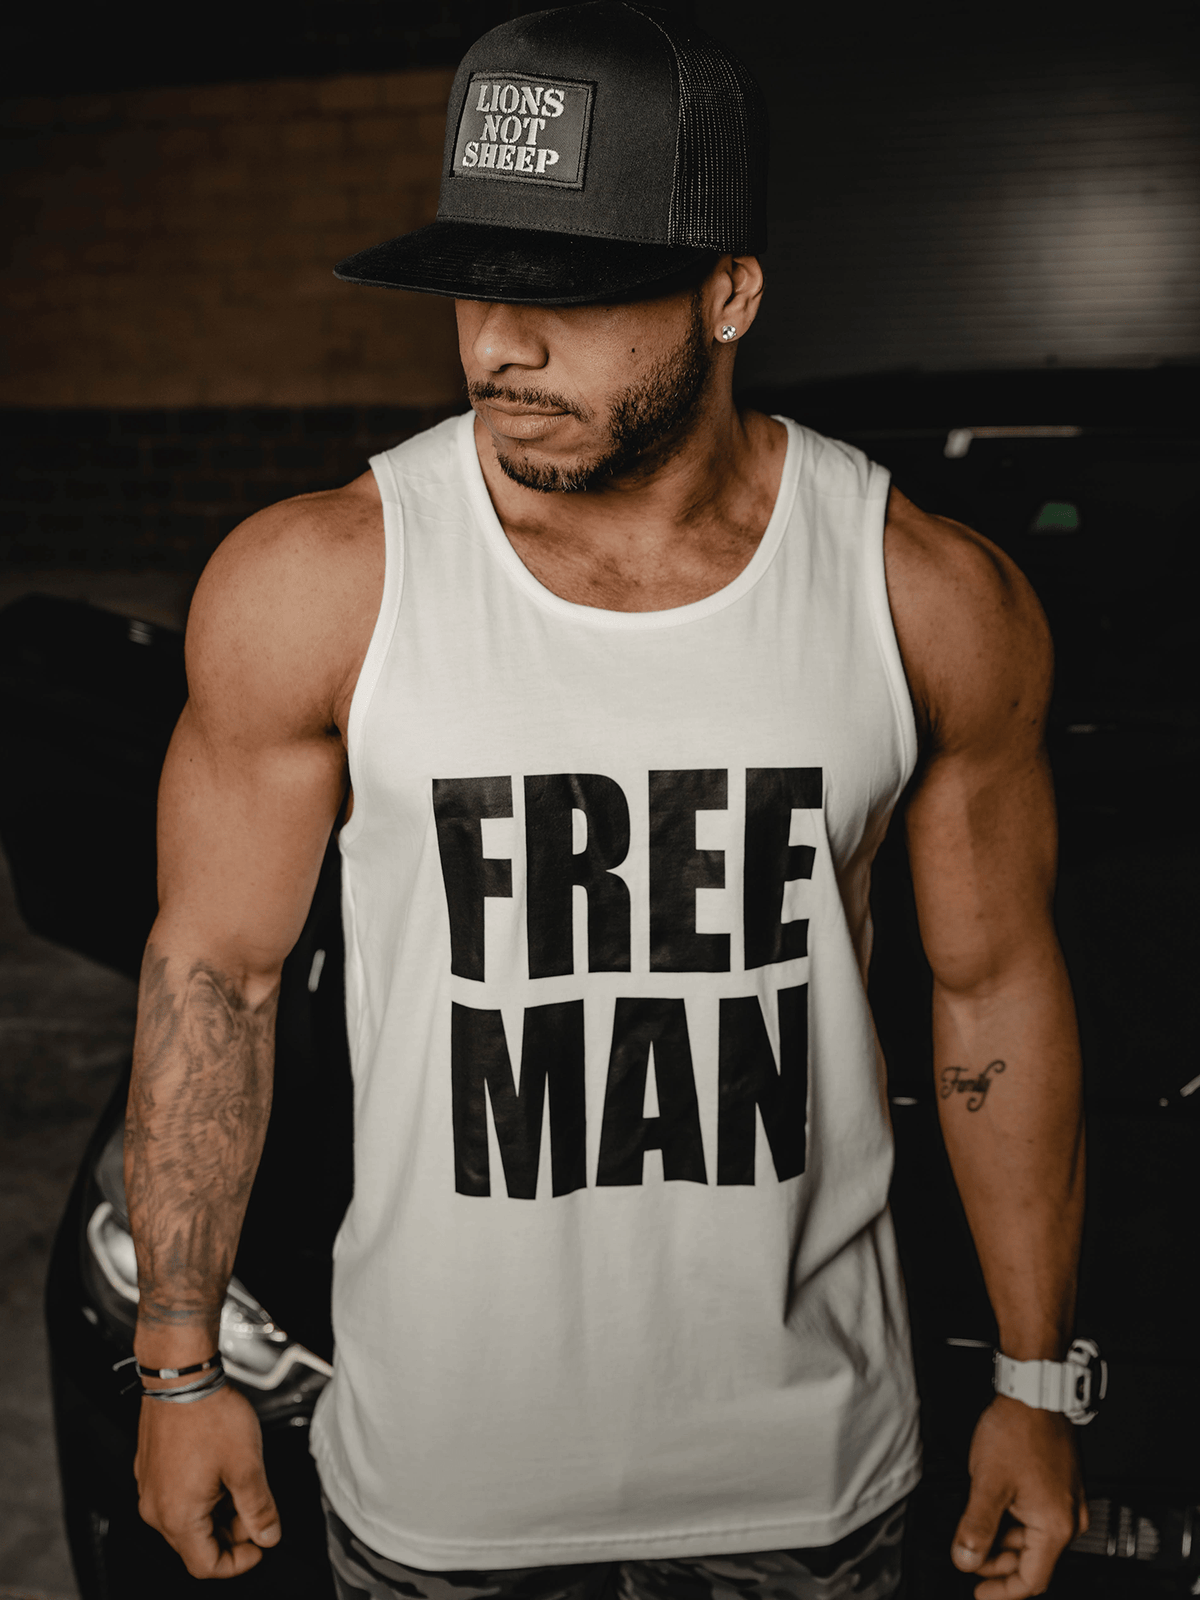 FREE MAN Mens Tank | Lions Not Sheep